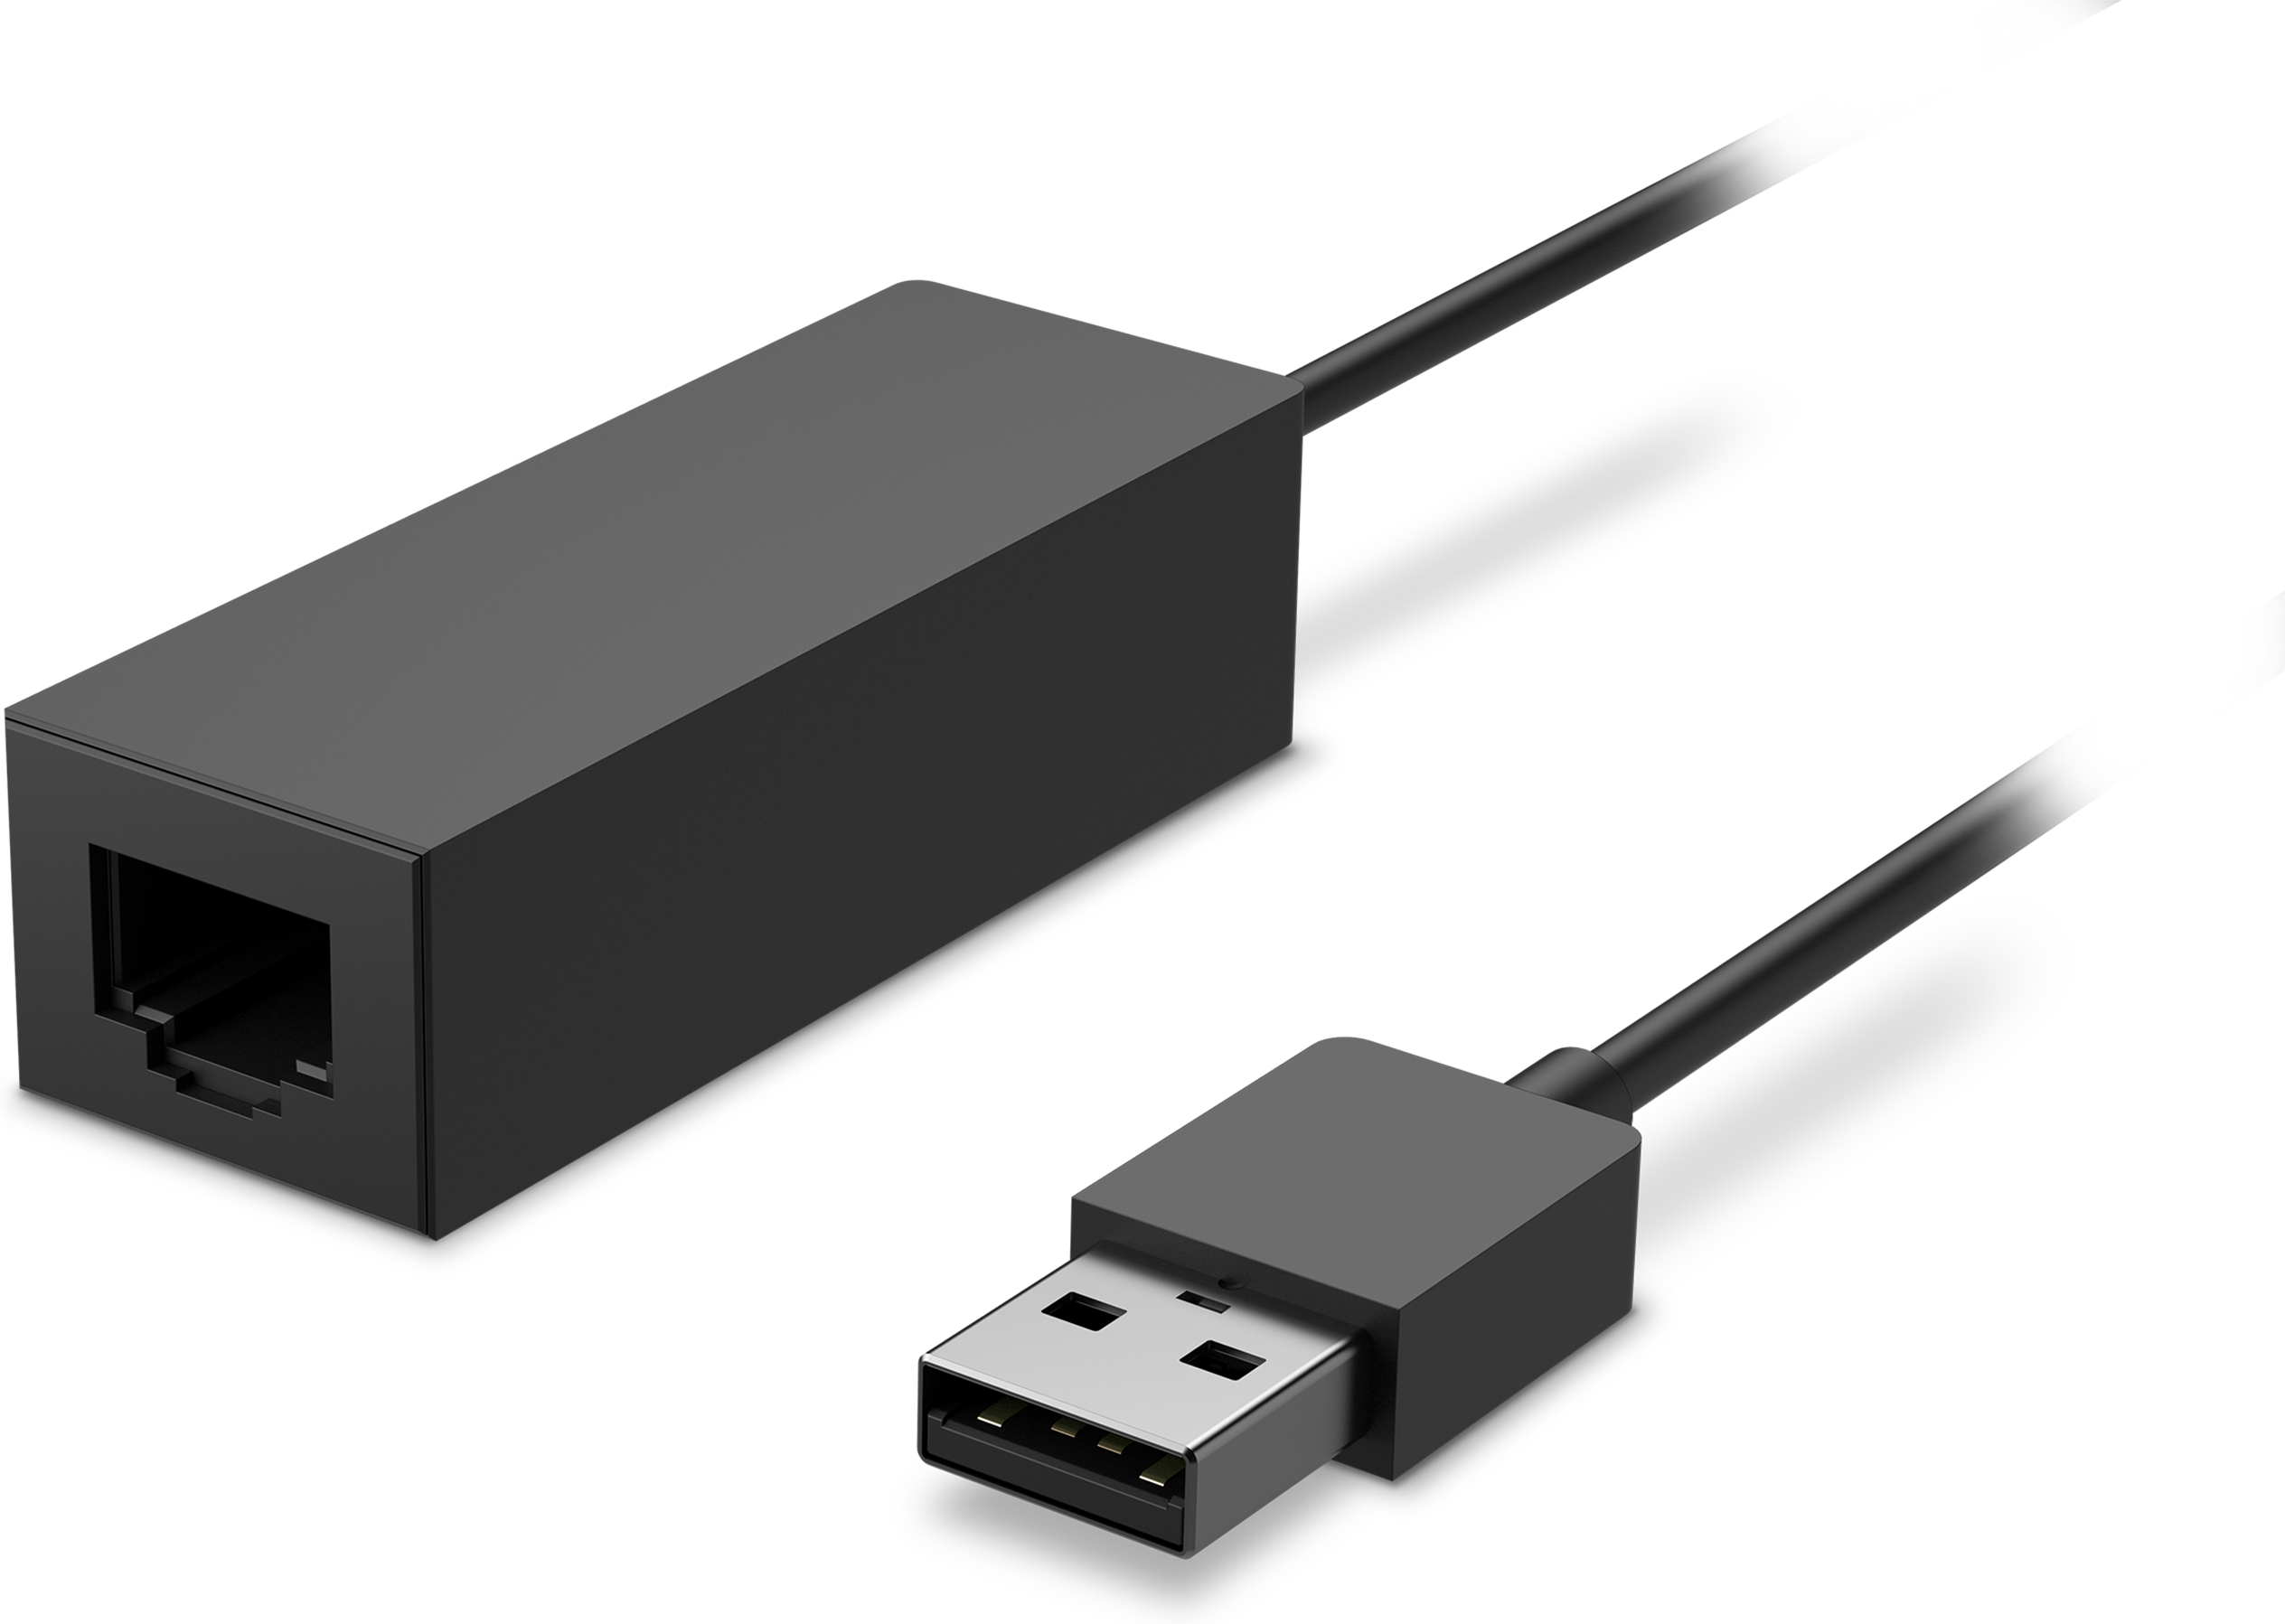 Buy Surface Usb 3 0 Gigabit Ethernet Adapter Microsoft Store En Sg